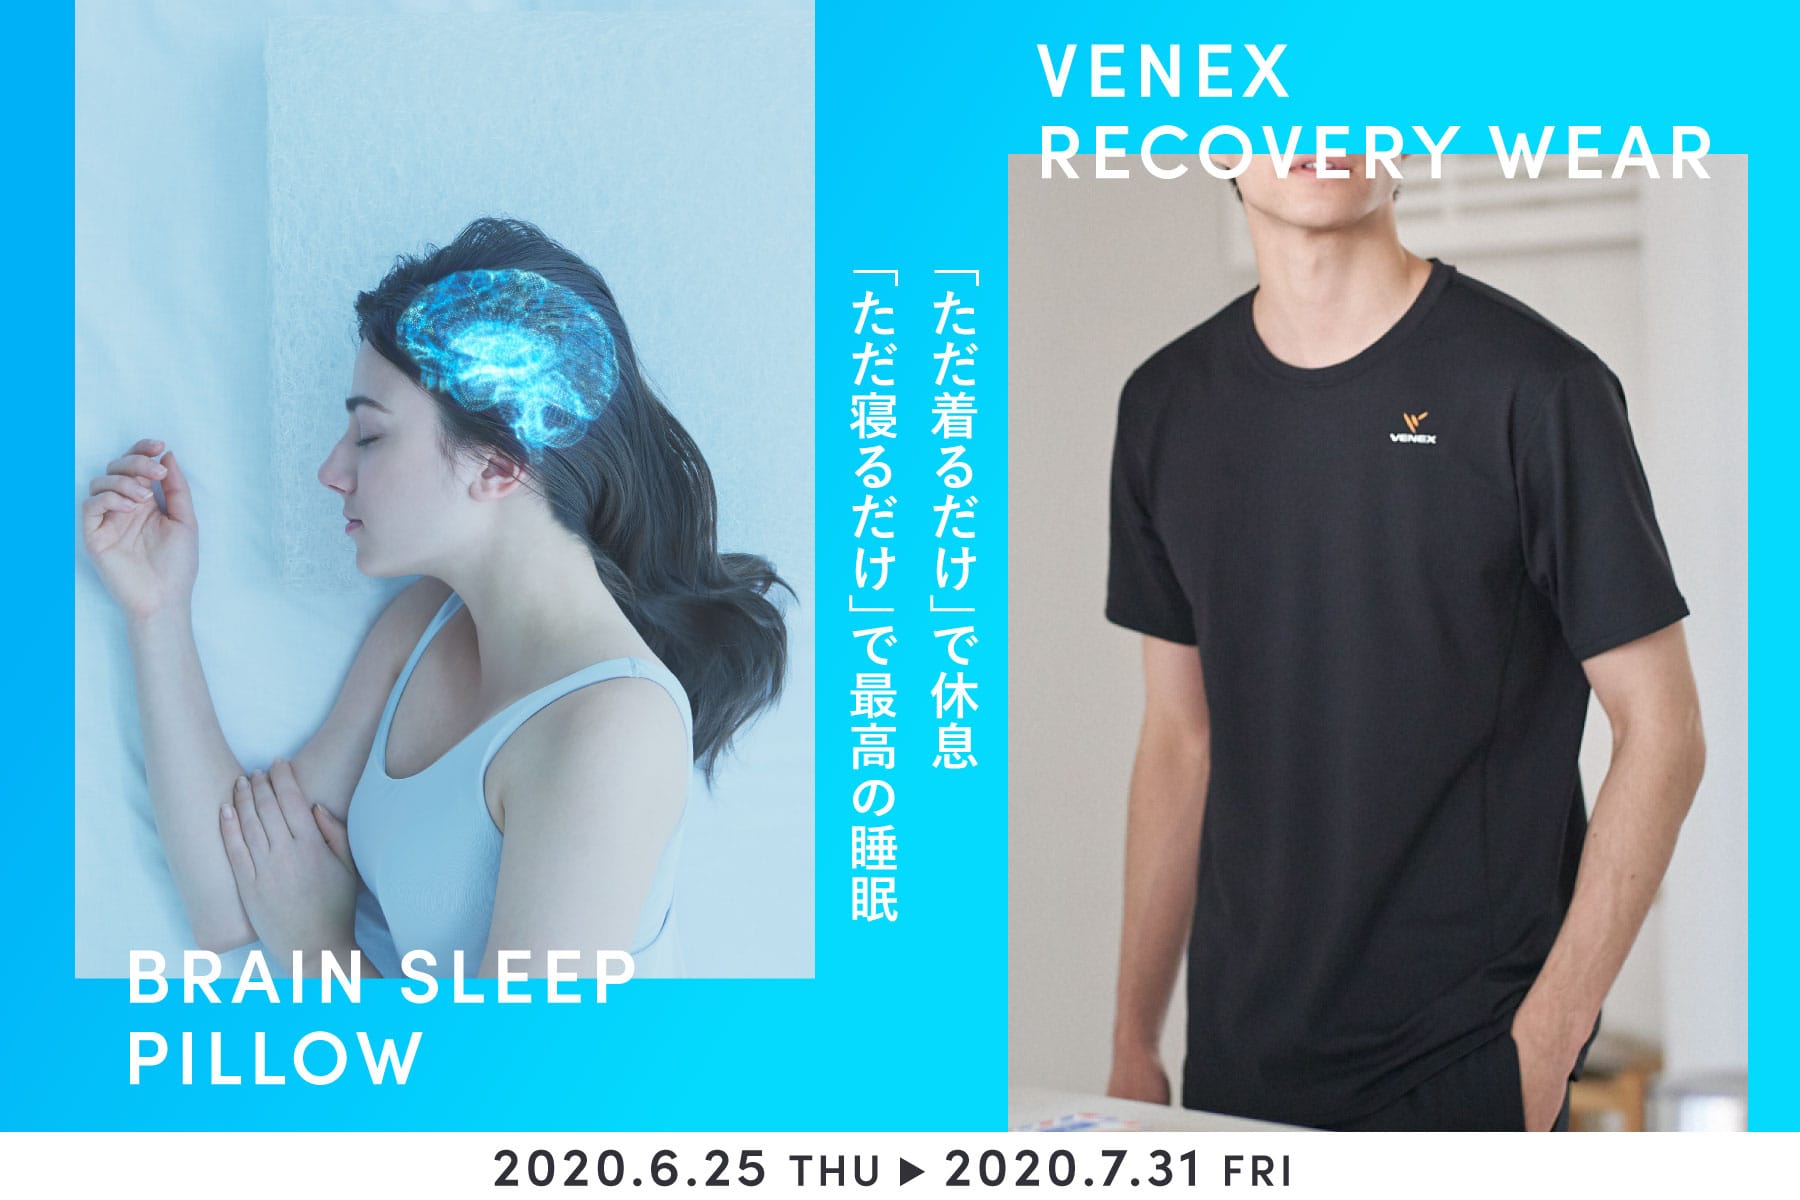 VENEX RECOVERY WEAR x BRAIN SLEEP PILLOW